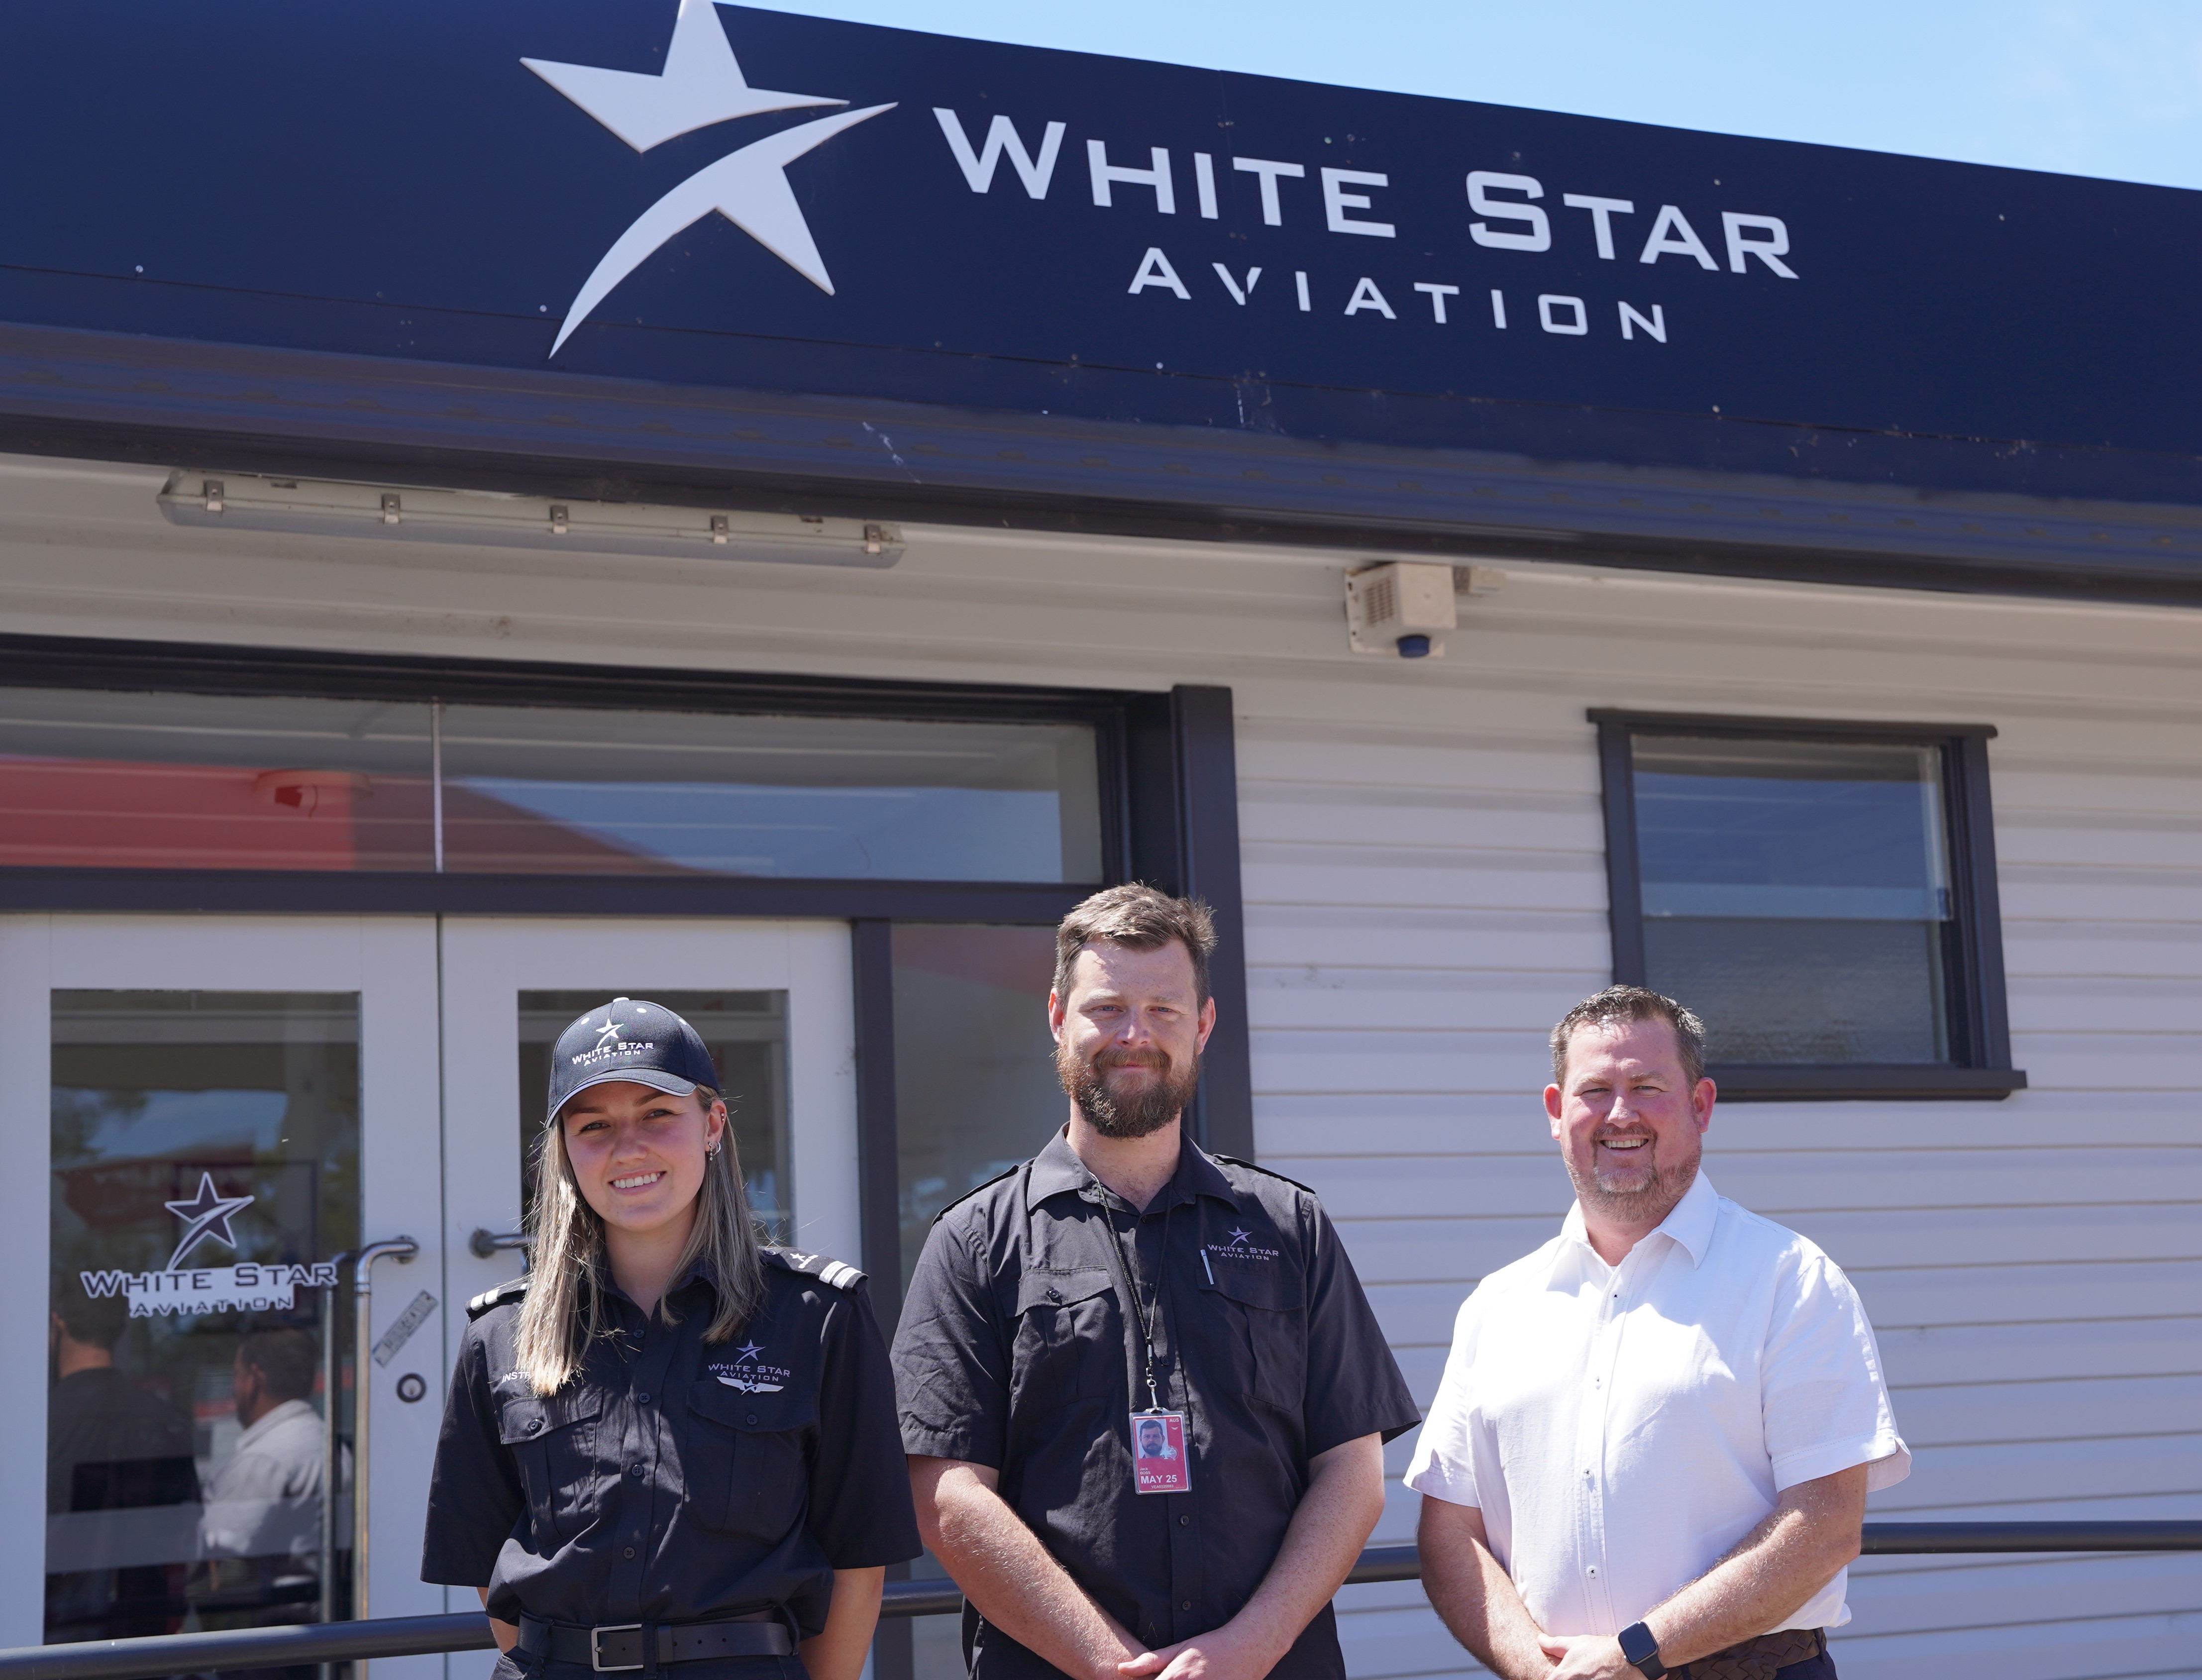 White Star Aviation